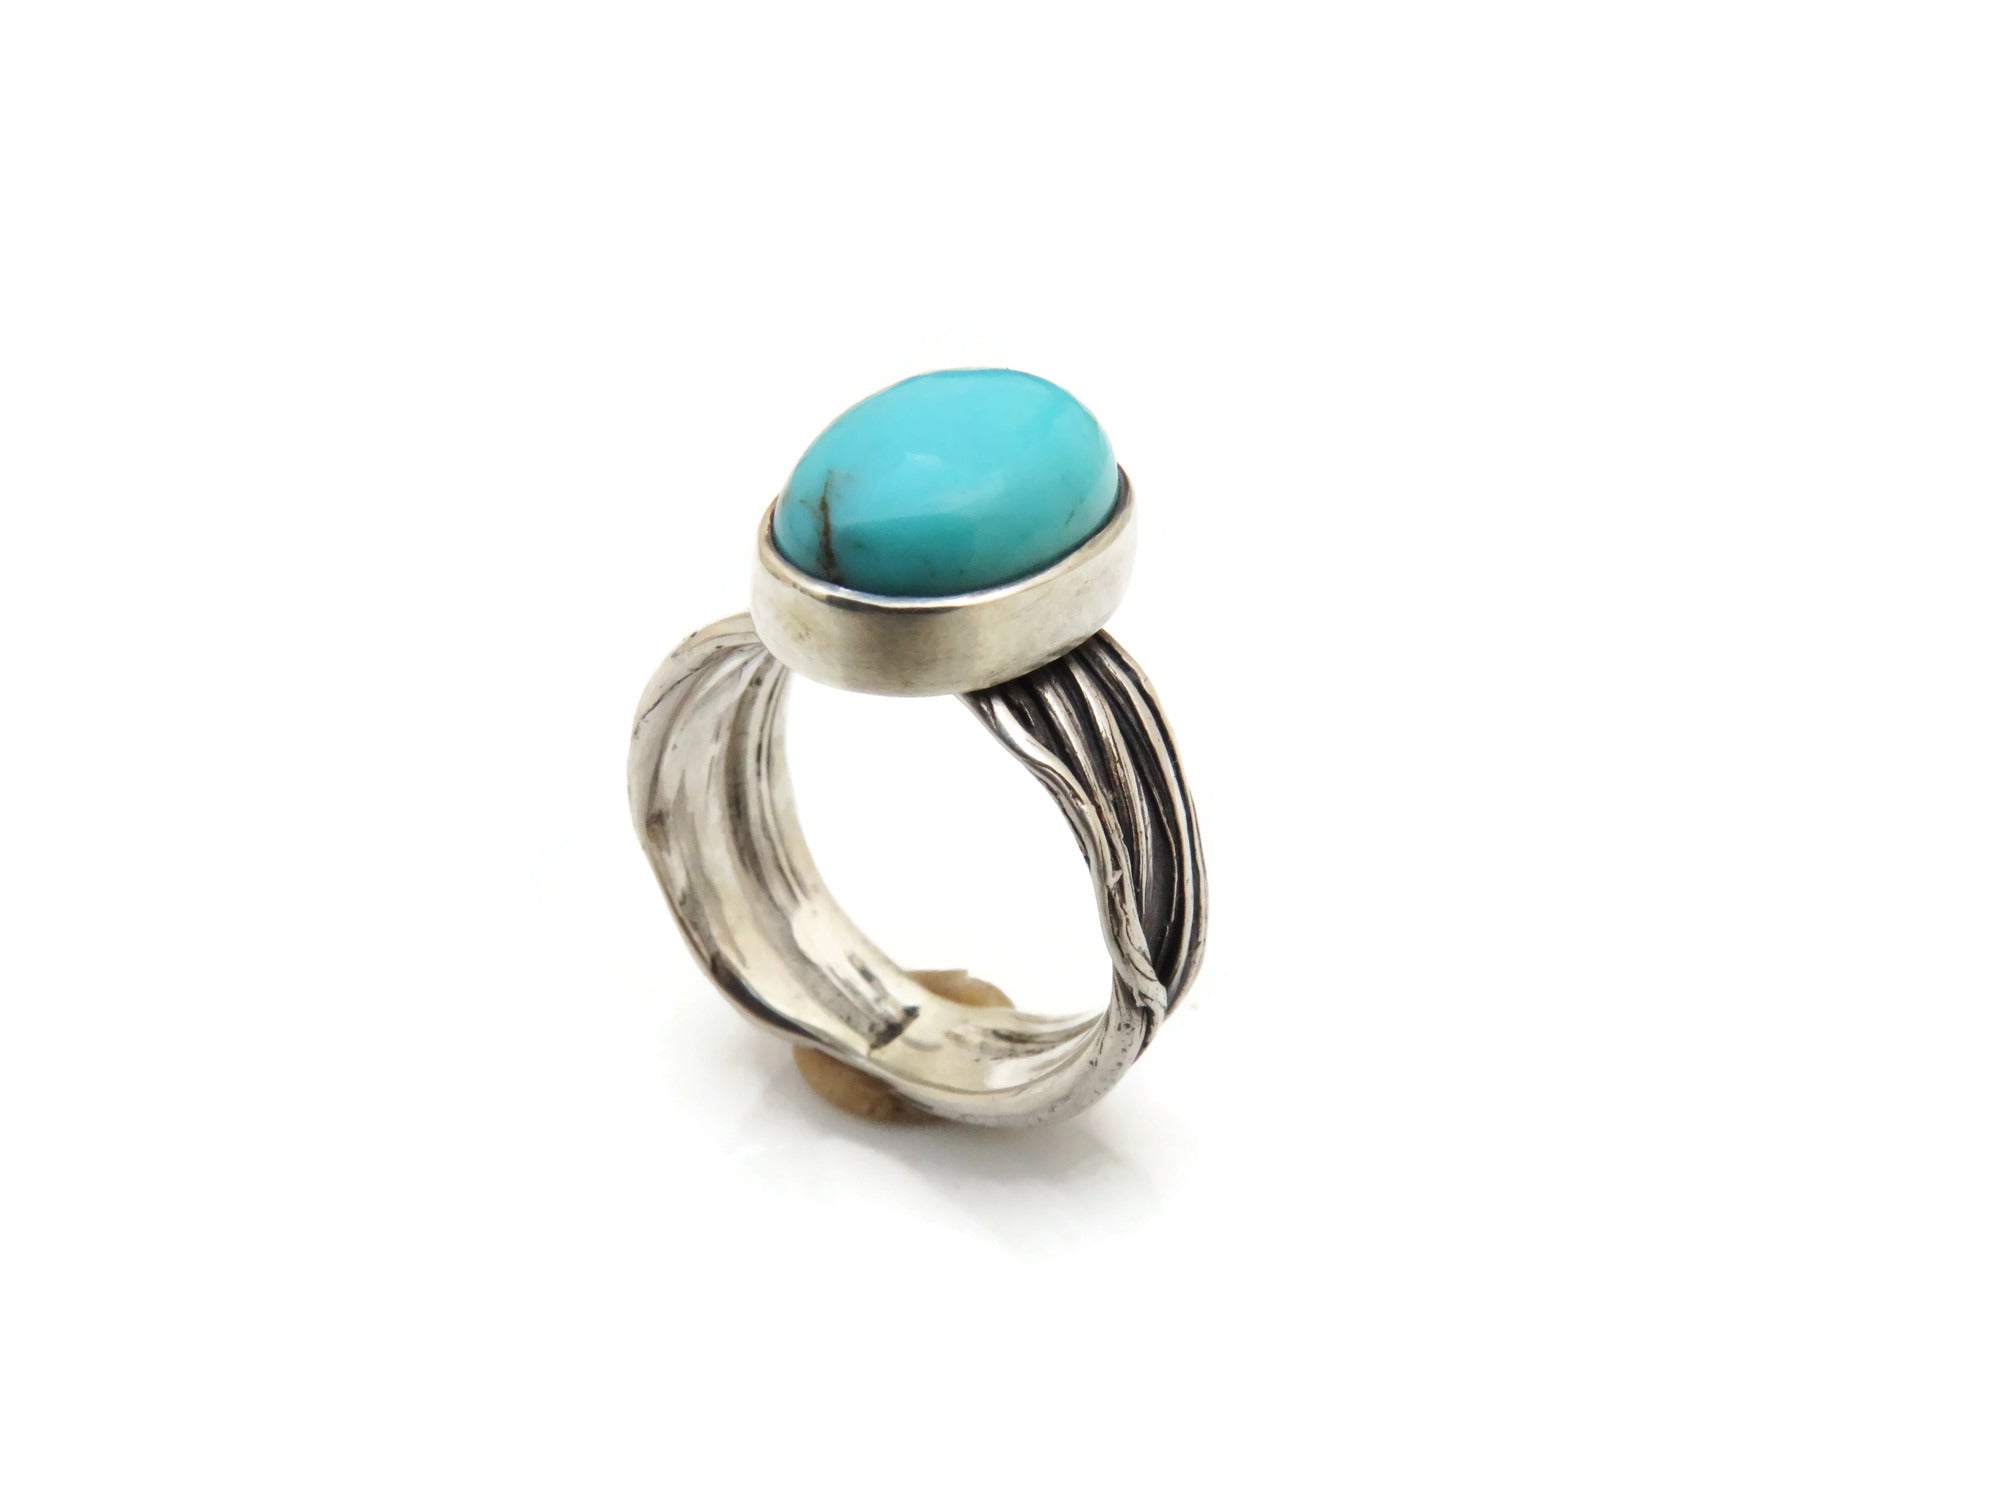 Natural Turquoise Silver Ring | KimyaJoyas